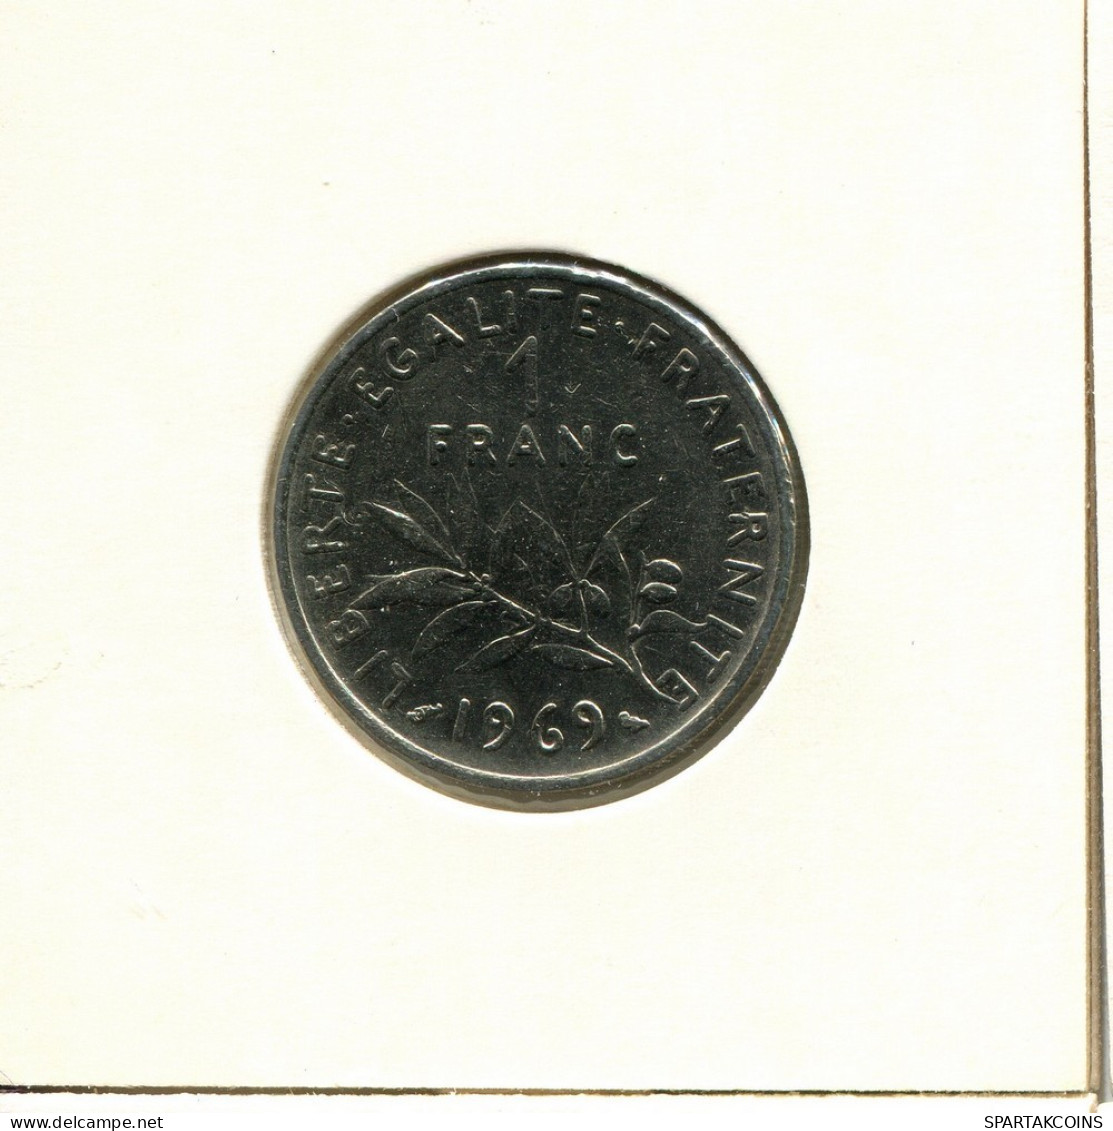 1 FRANC 1969 FRANKREICH FRANCE Französisch Münze #BB551.D.A - 1 Franc